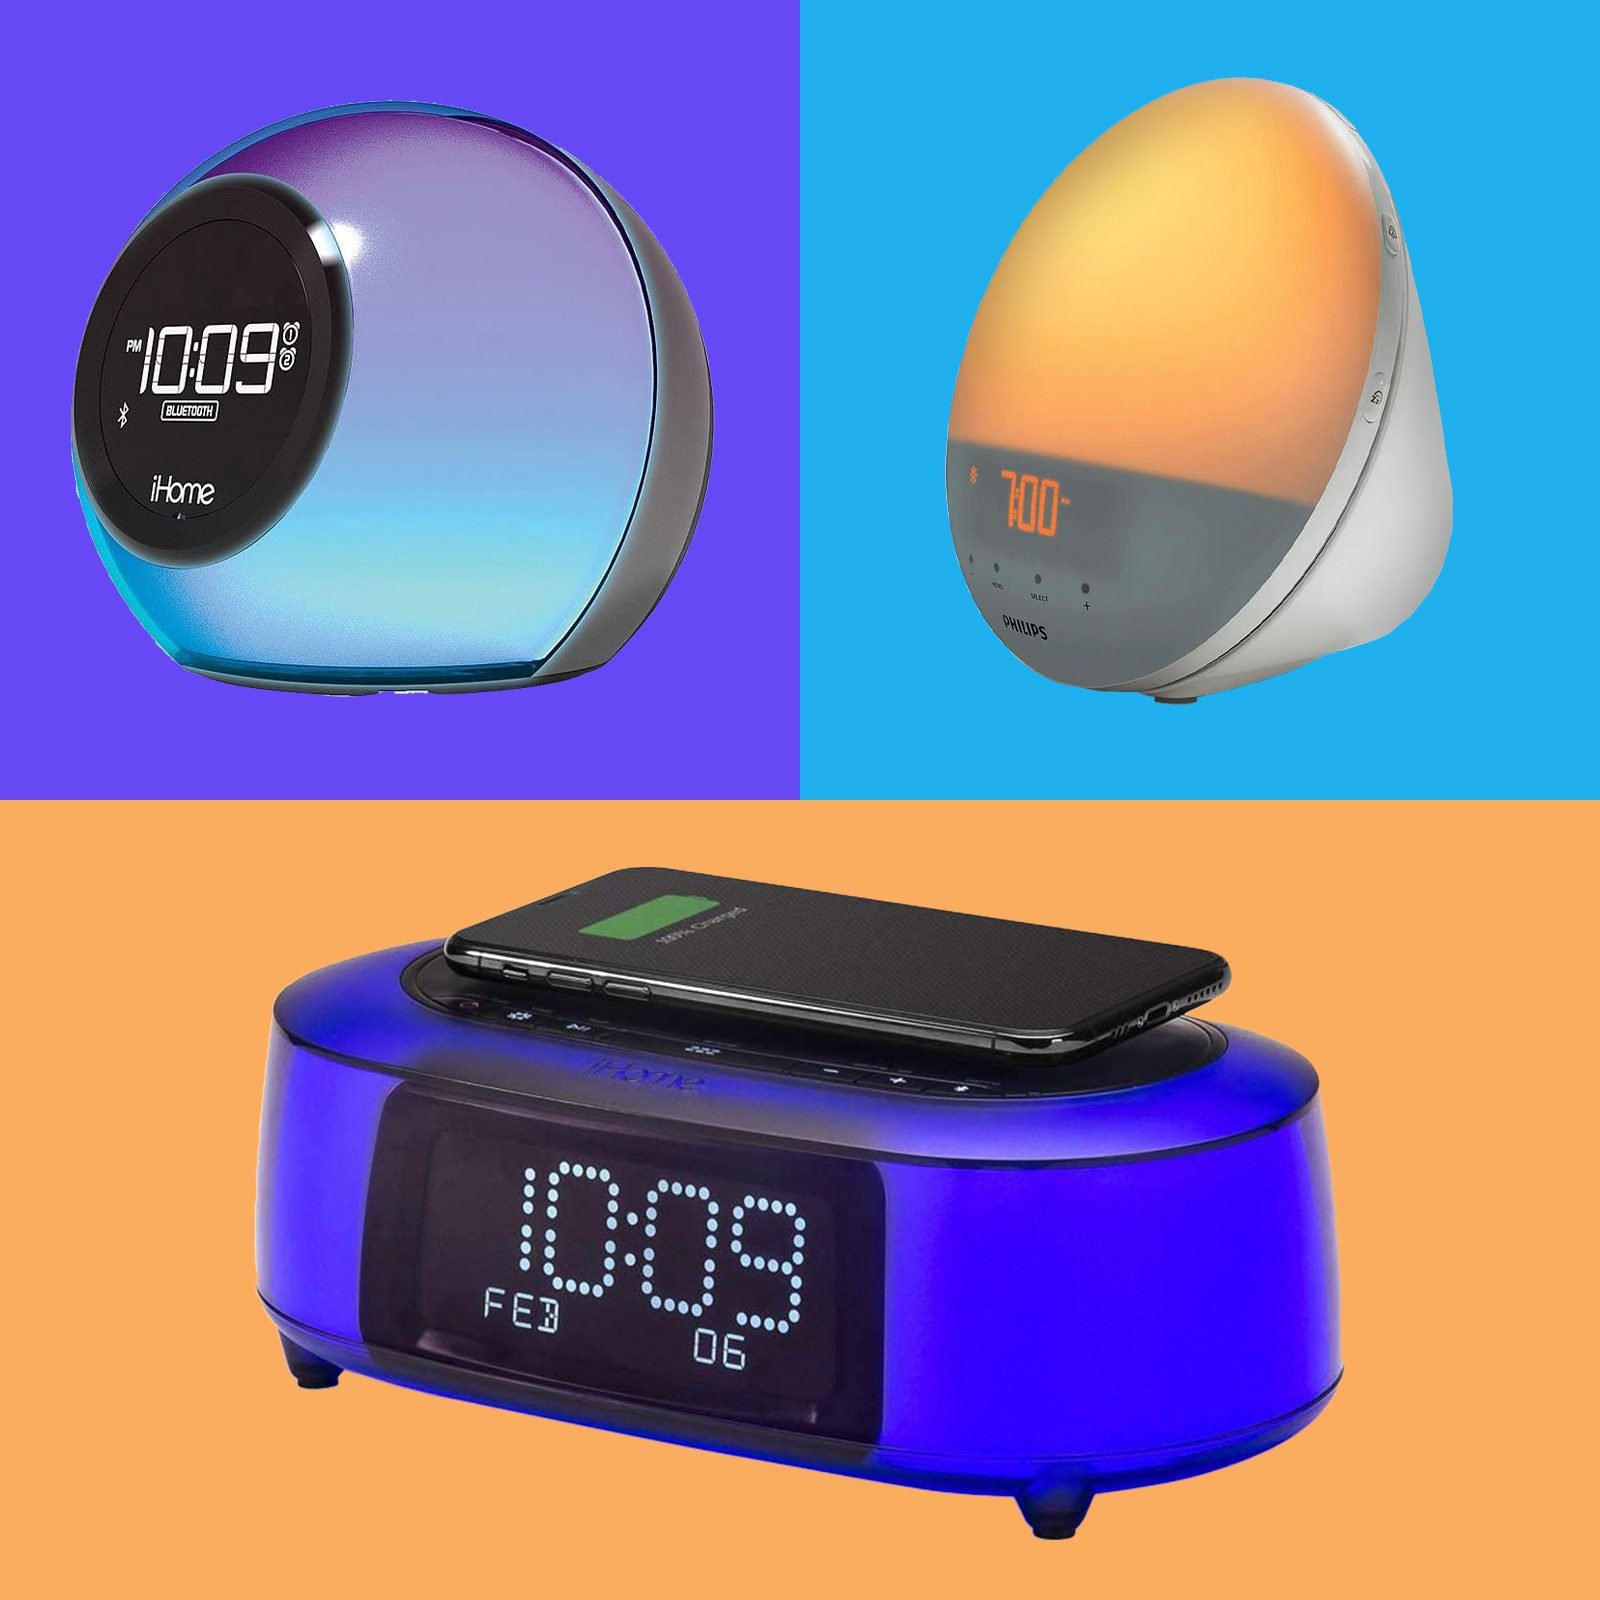 Award-Winning Bluetooth Speakers & Alarm Clocks - The World of